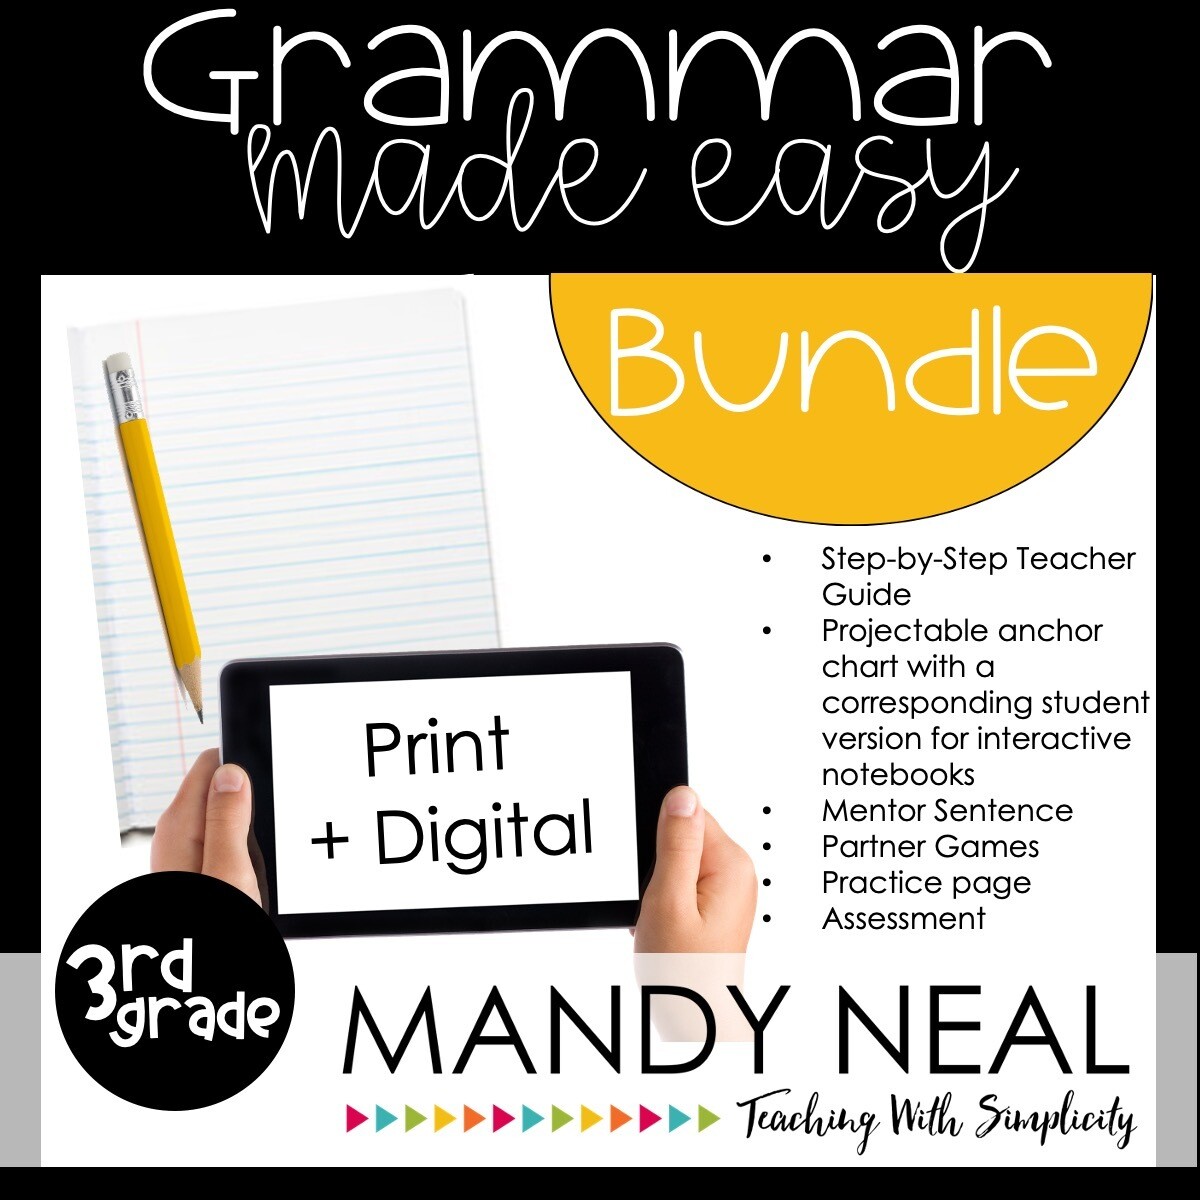 Print + Digital Third Grade Grammar Activities Bundle